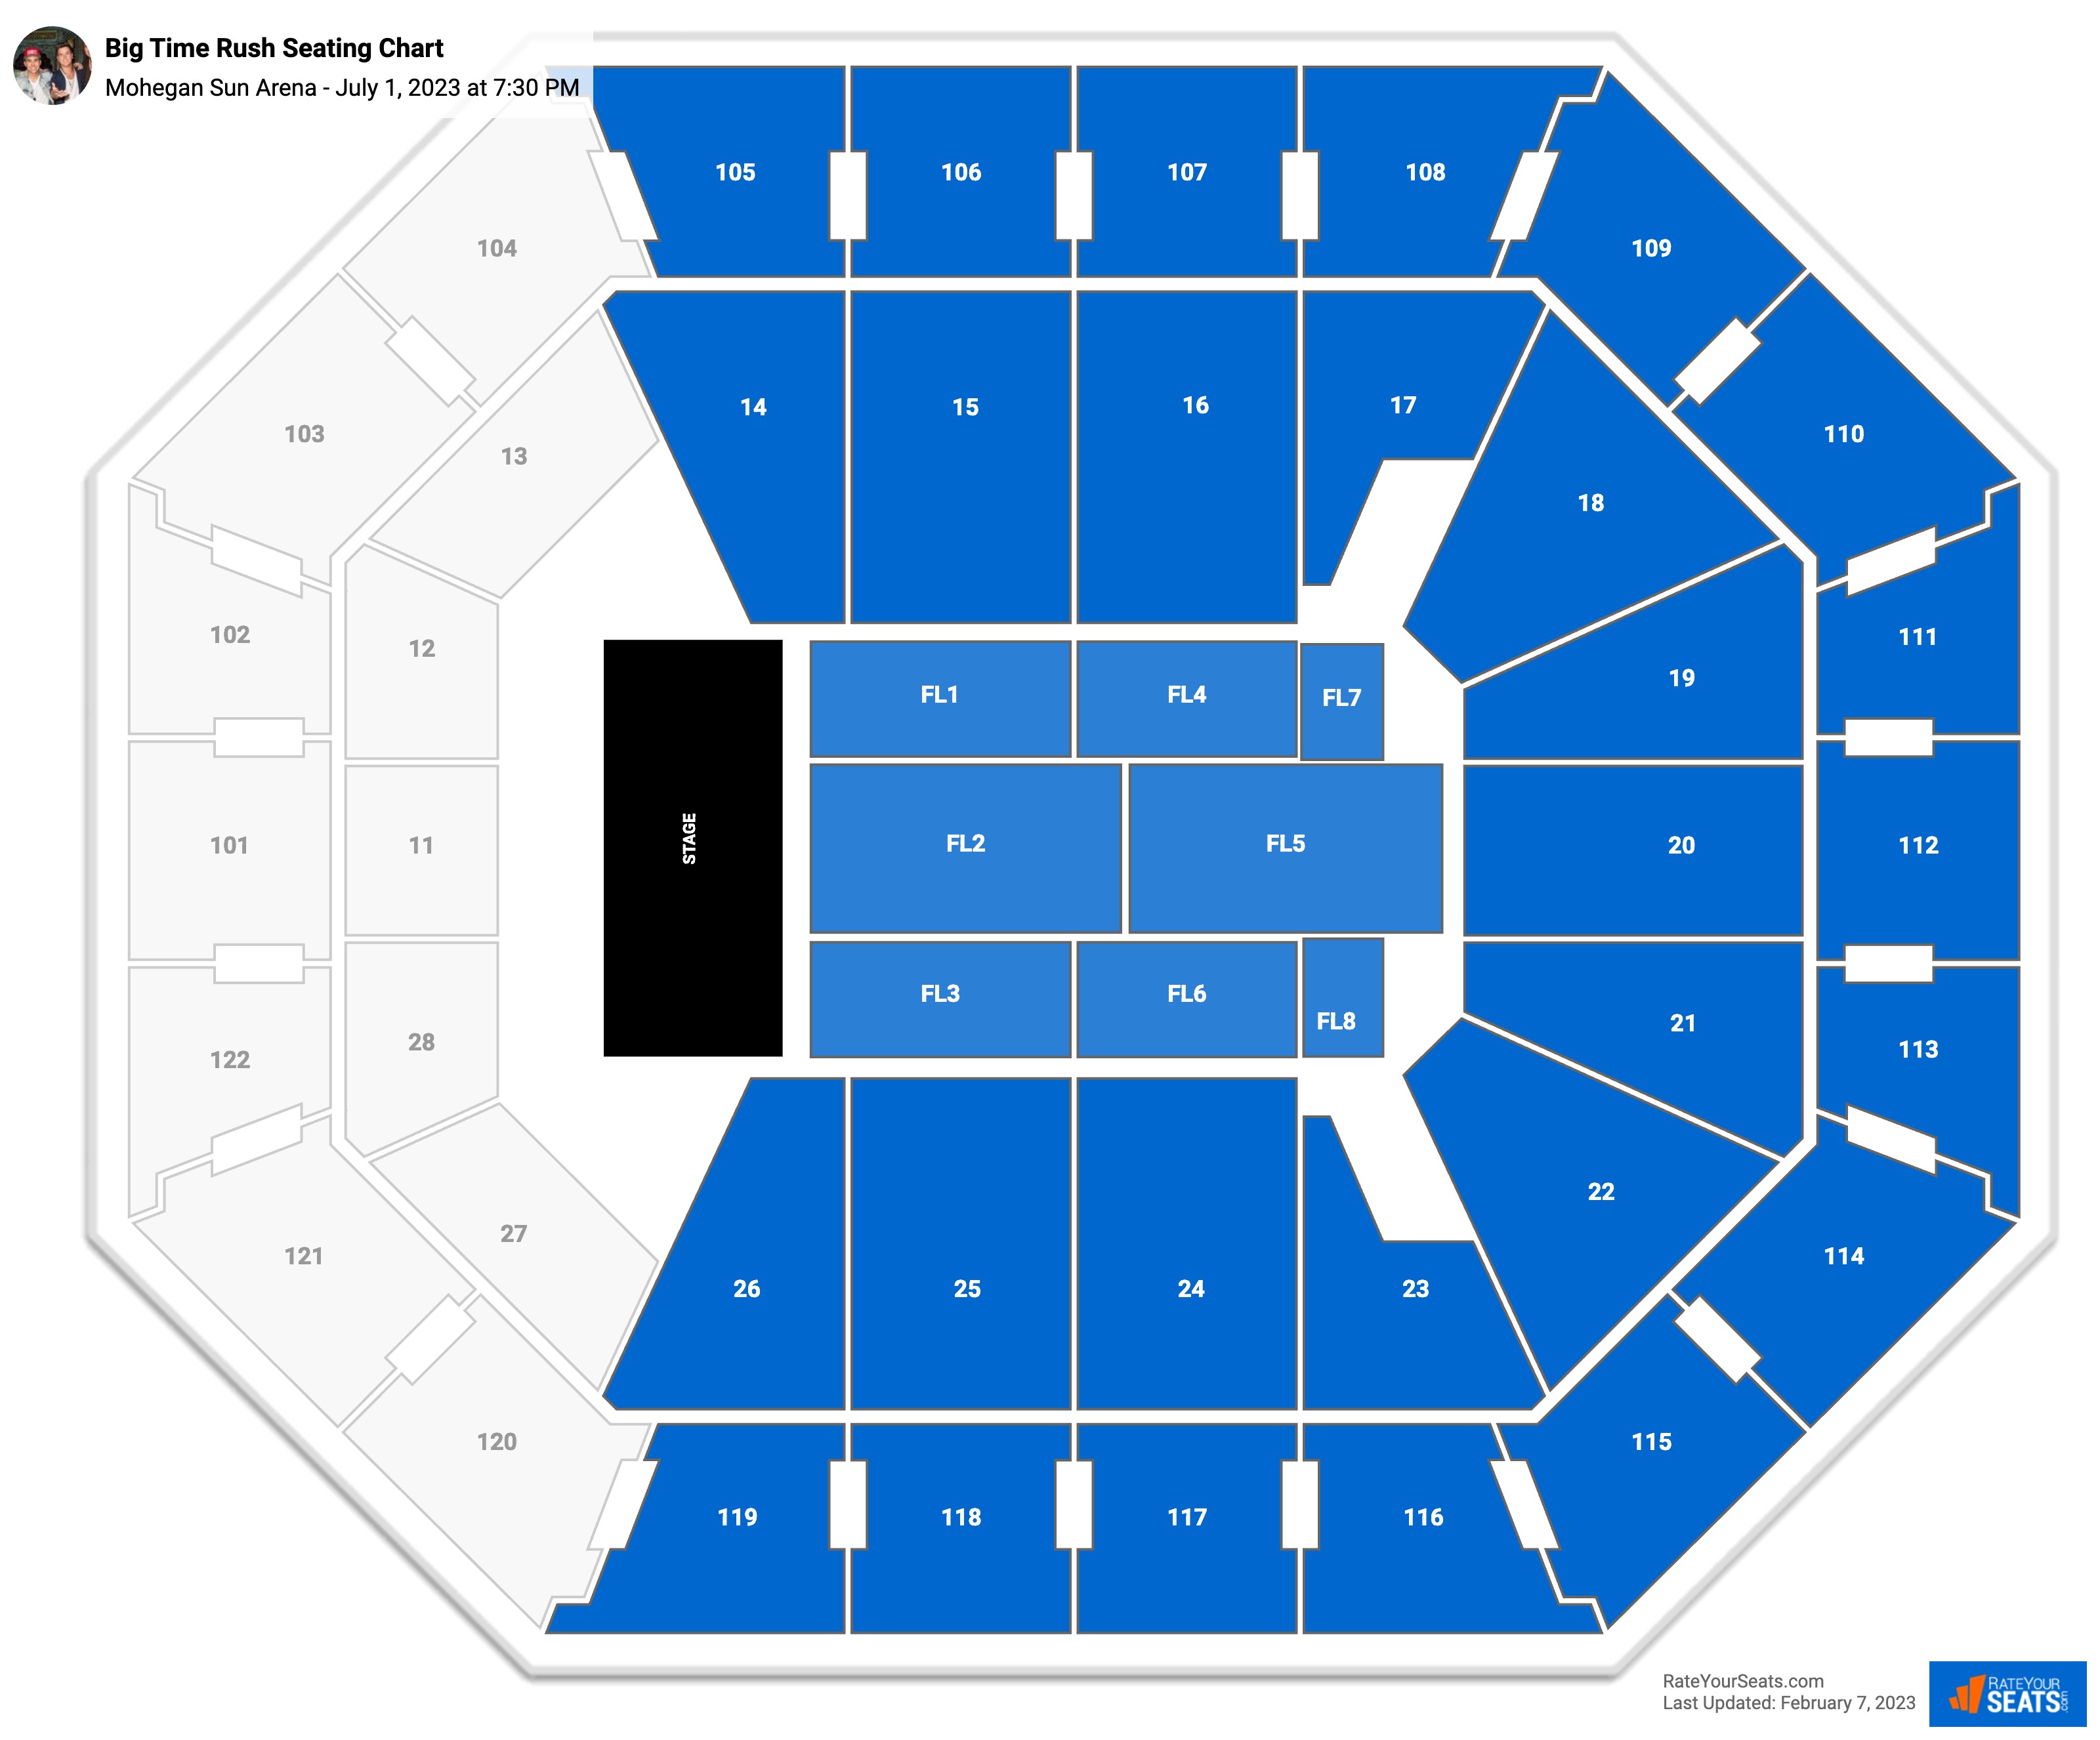 Mohegan Sun Arena Concert Seating Chart - RateYourSeats.com